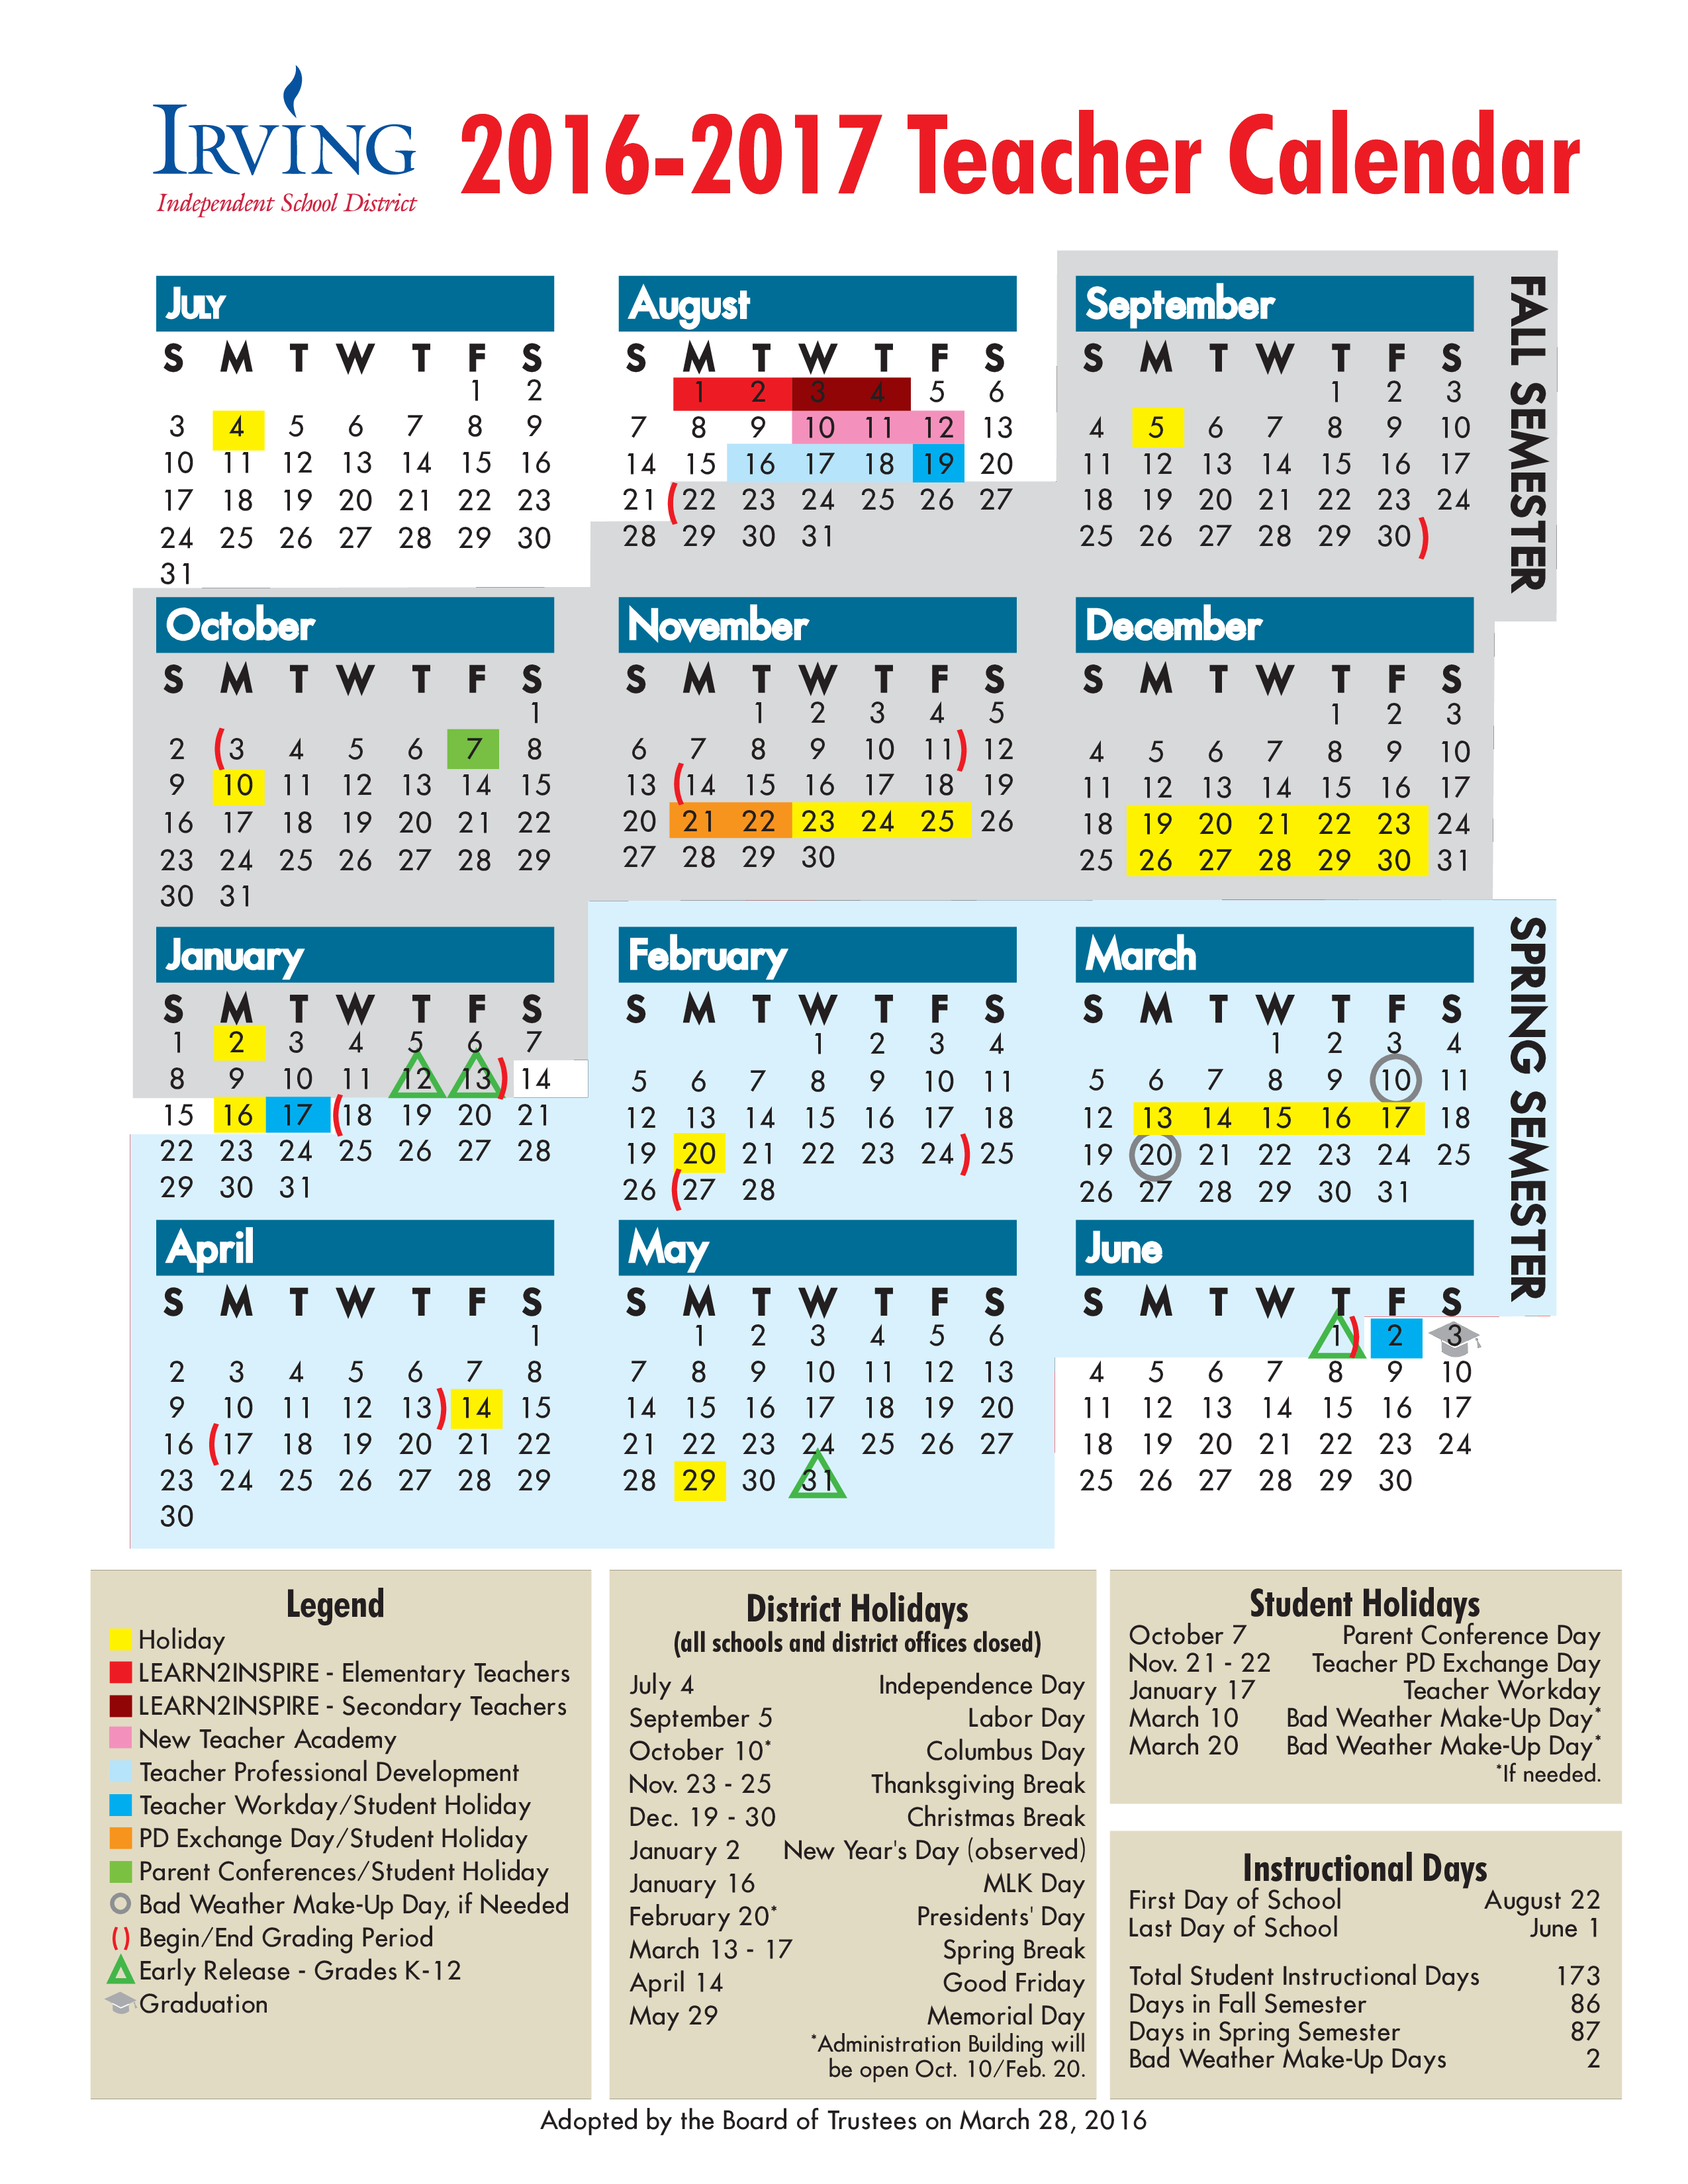 Teacher Calendar main image